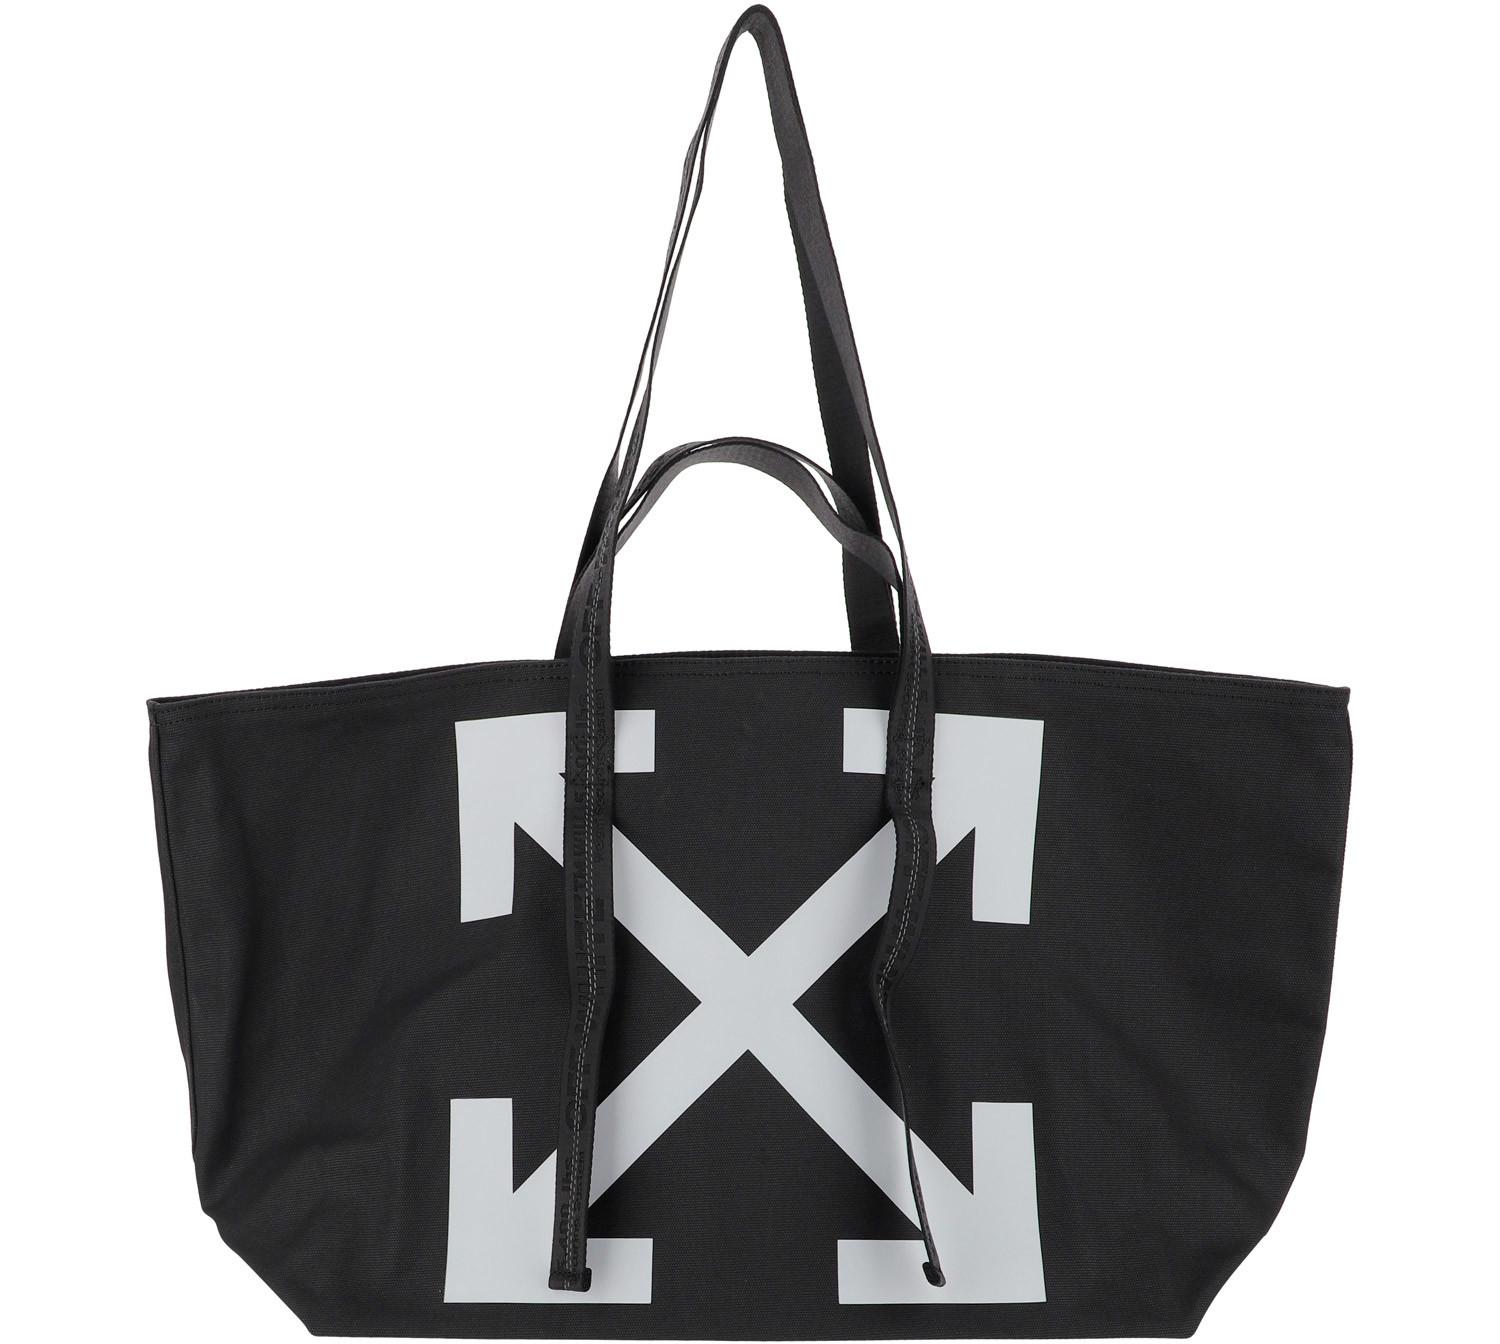 Off-White Kids Arrow-motif Logo Belt Bag - Black